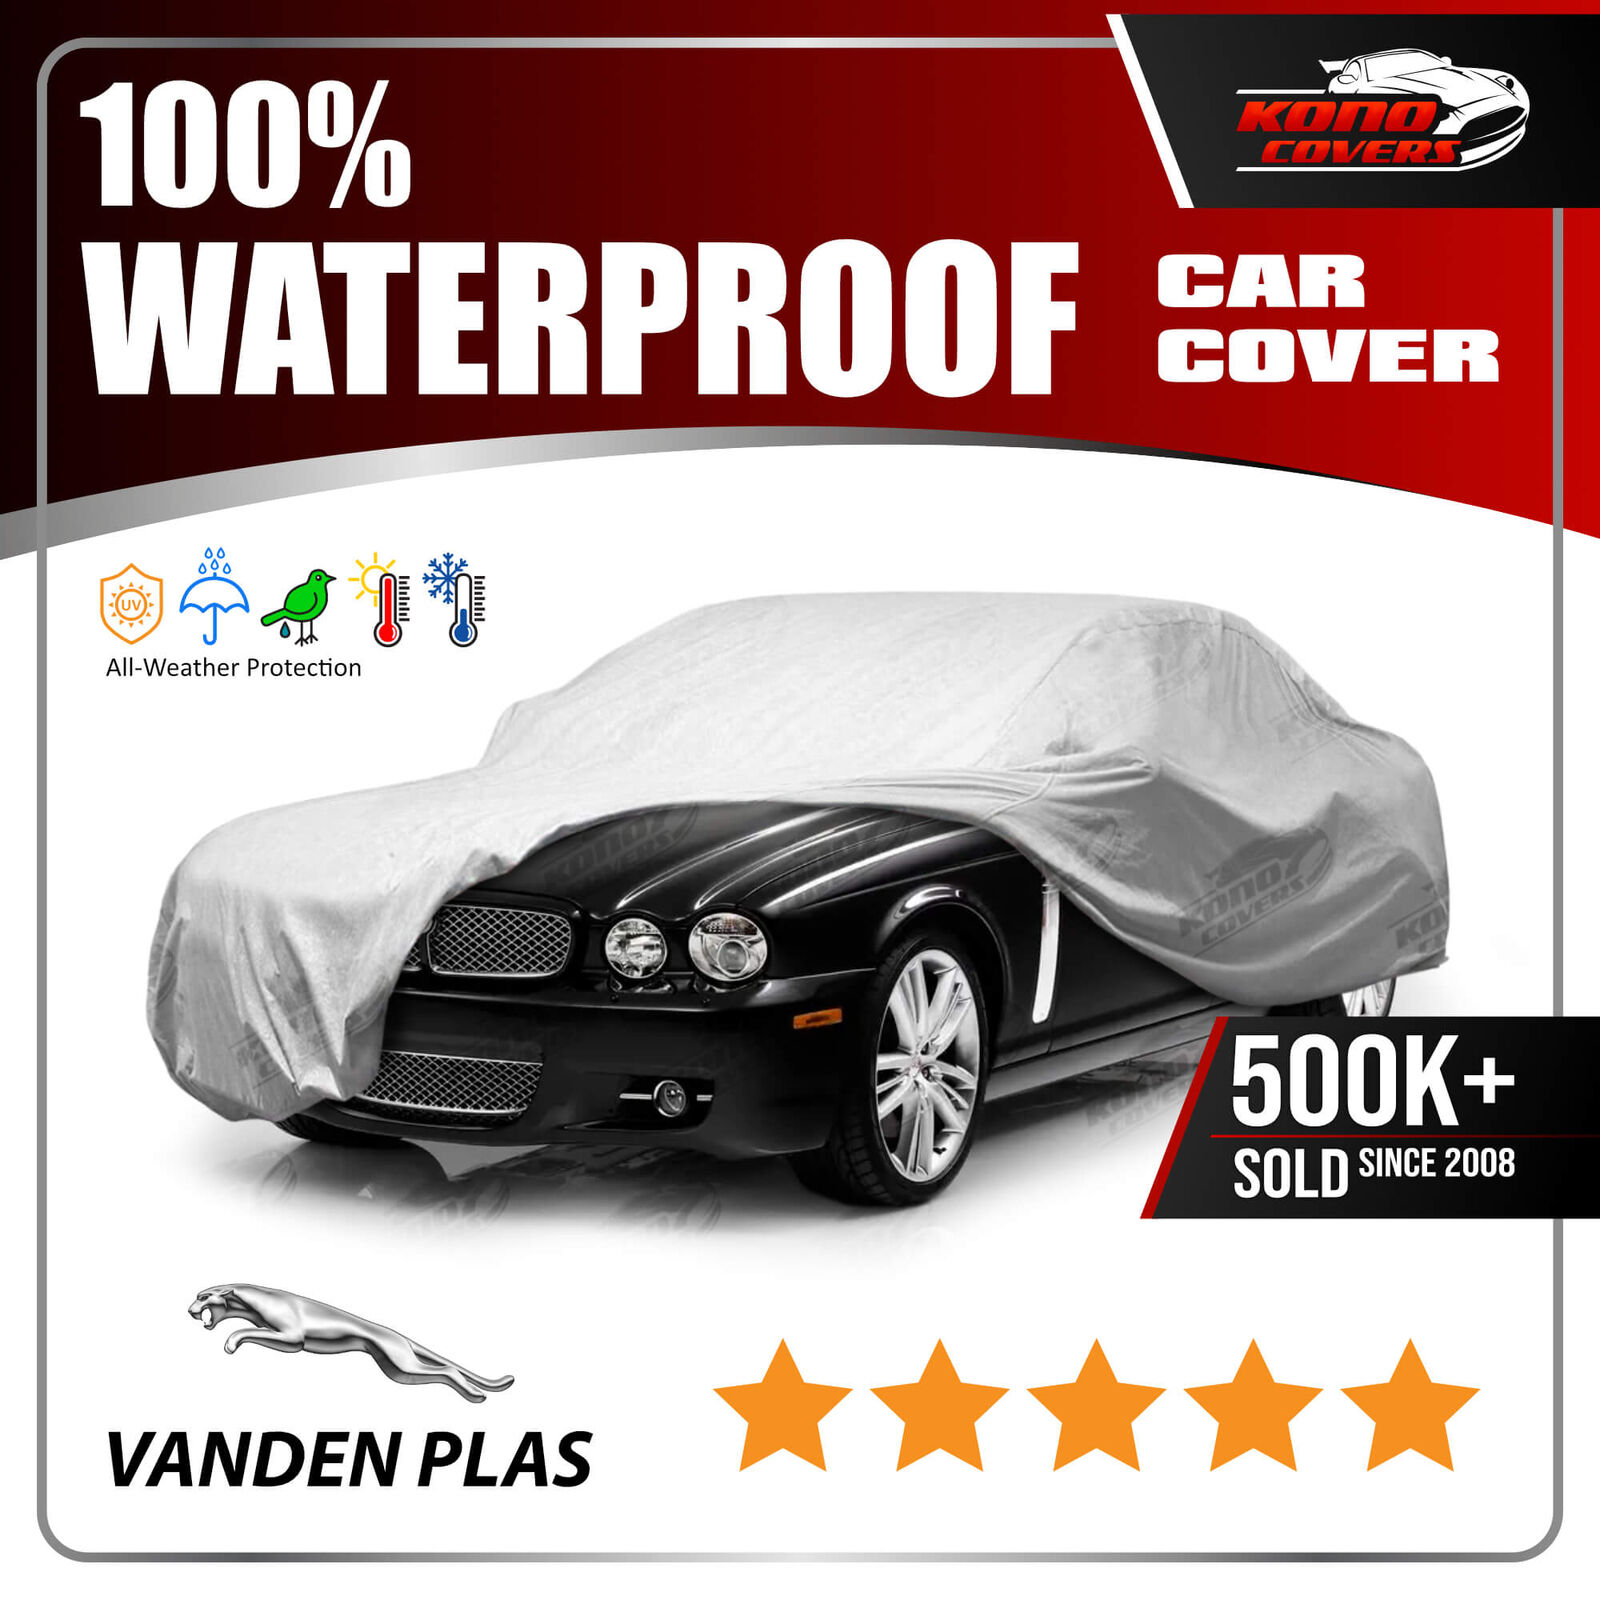 JAGUAR VANDEN PLAS 1998-2009 CAR COVER - 100% Waterproof 100% Breathable